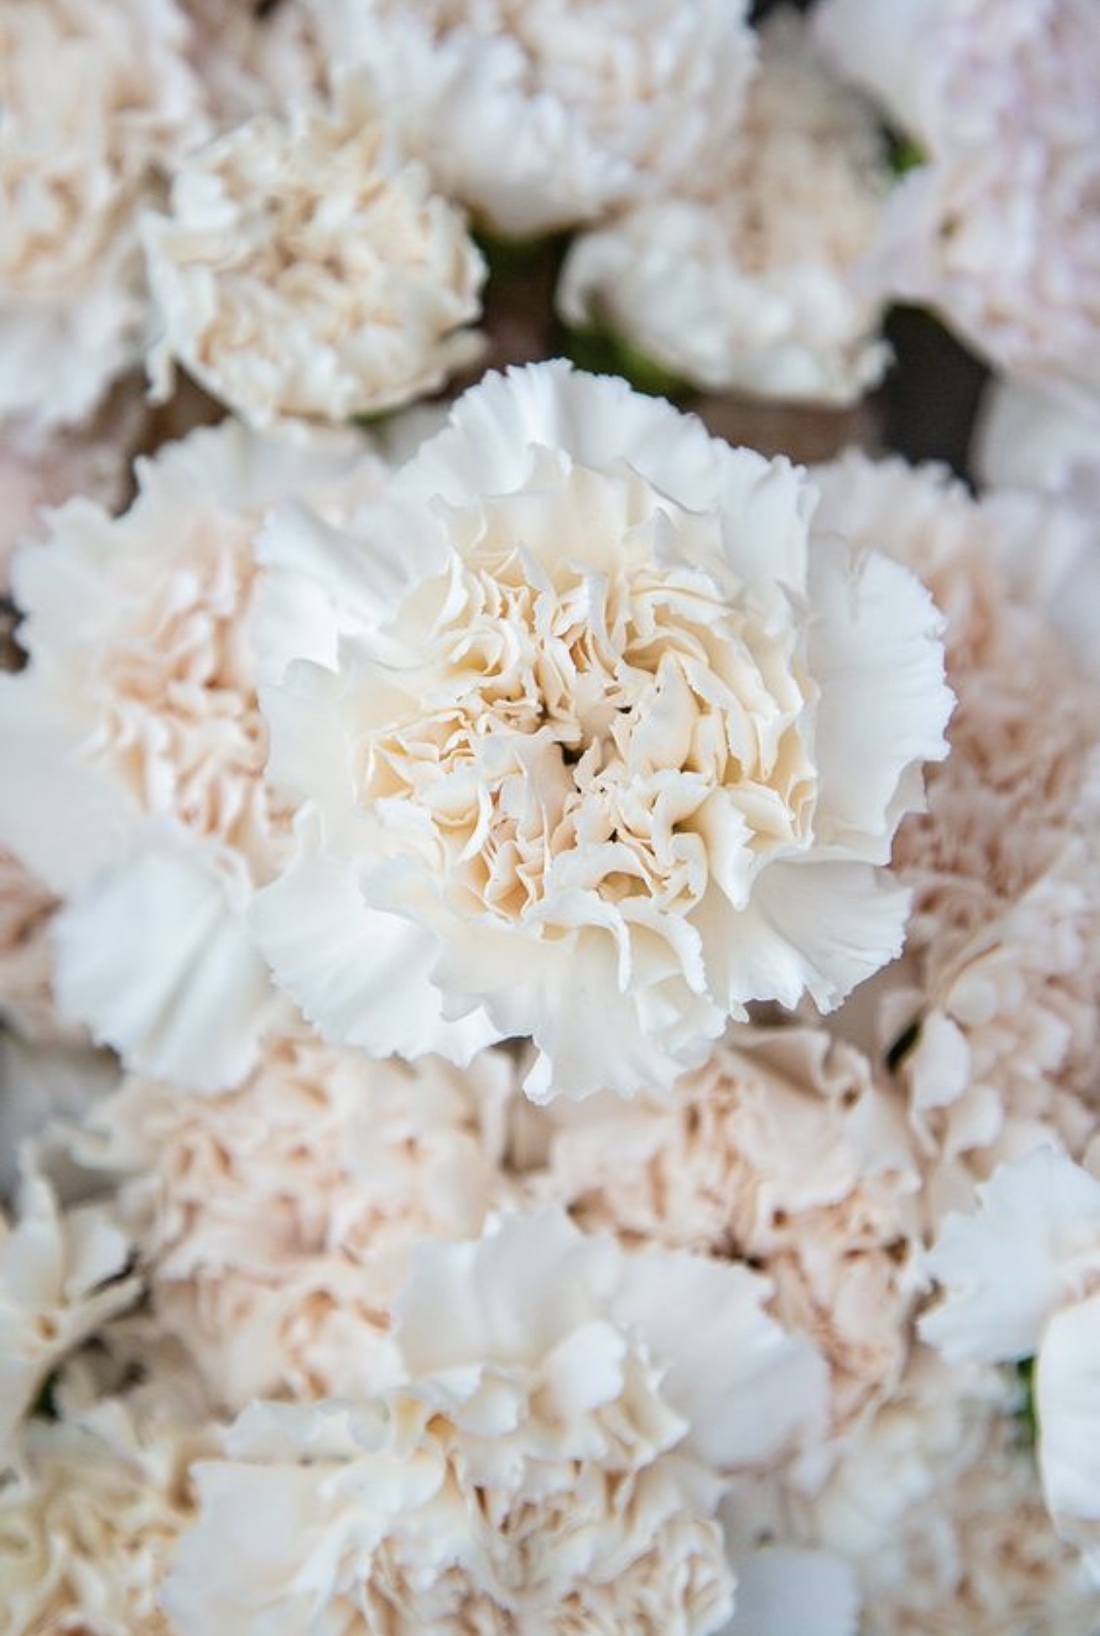 Fluffy white carnations